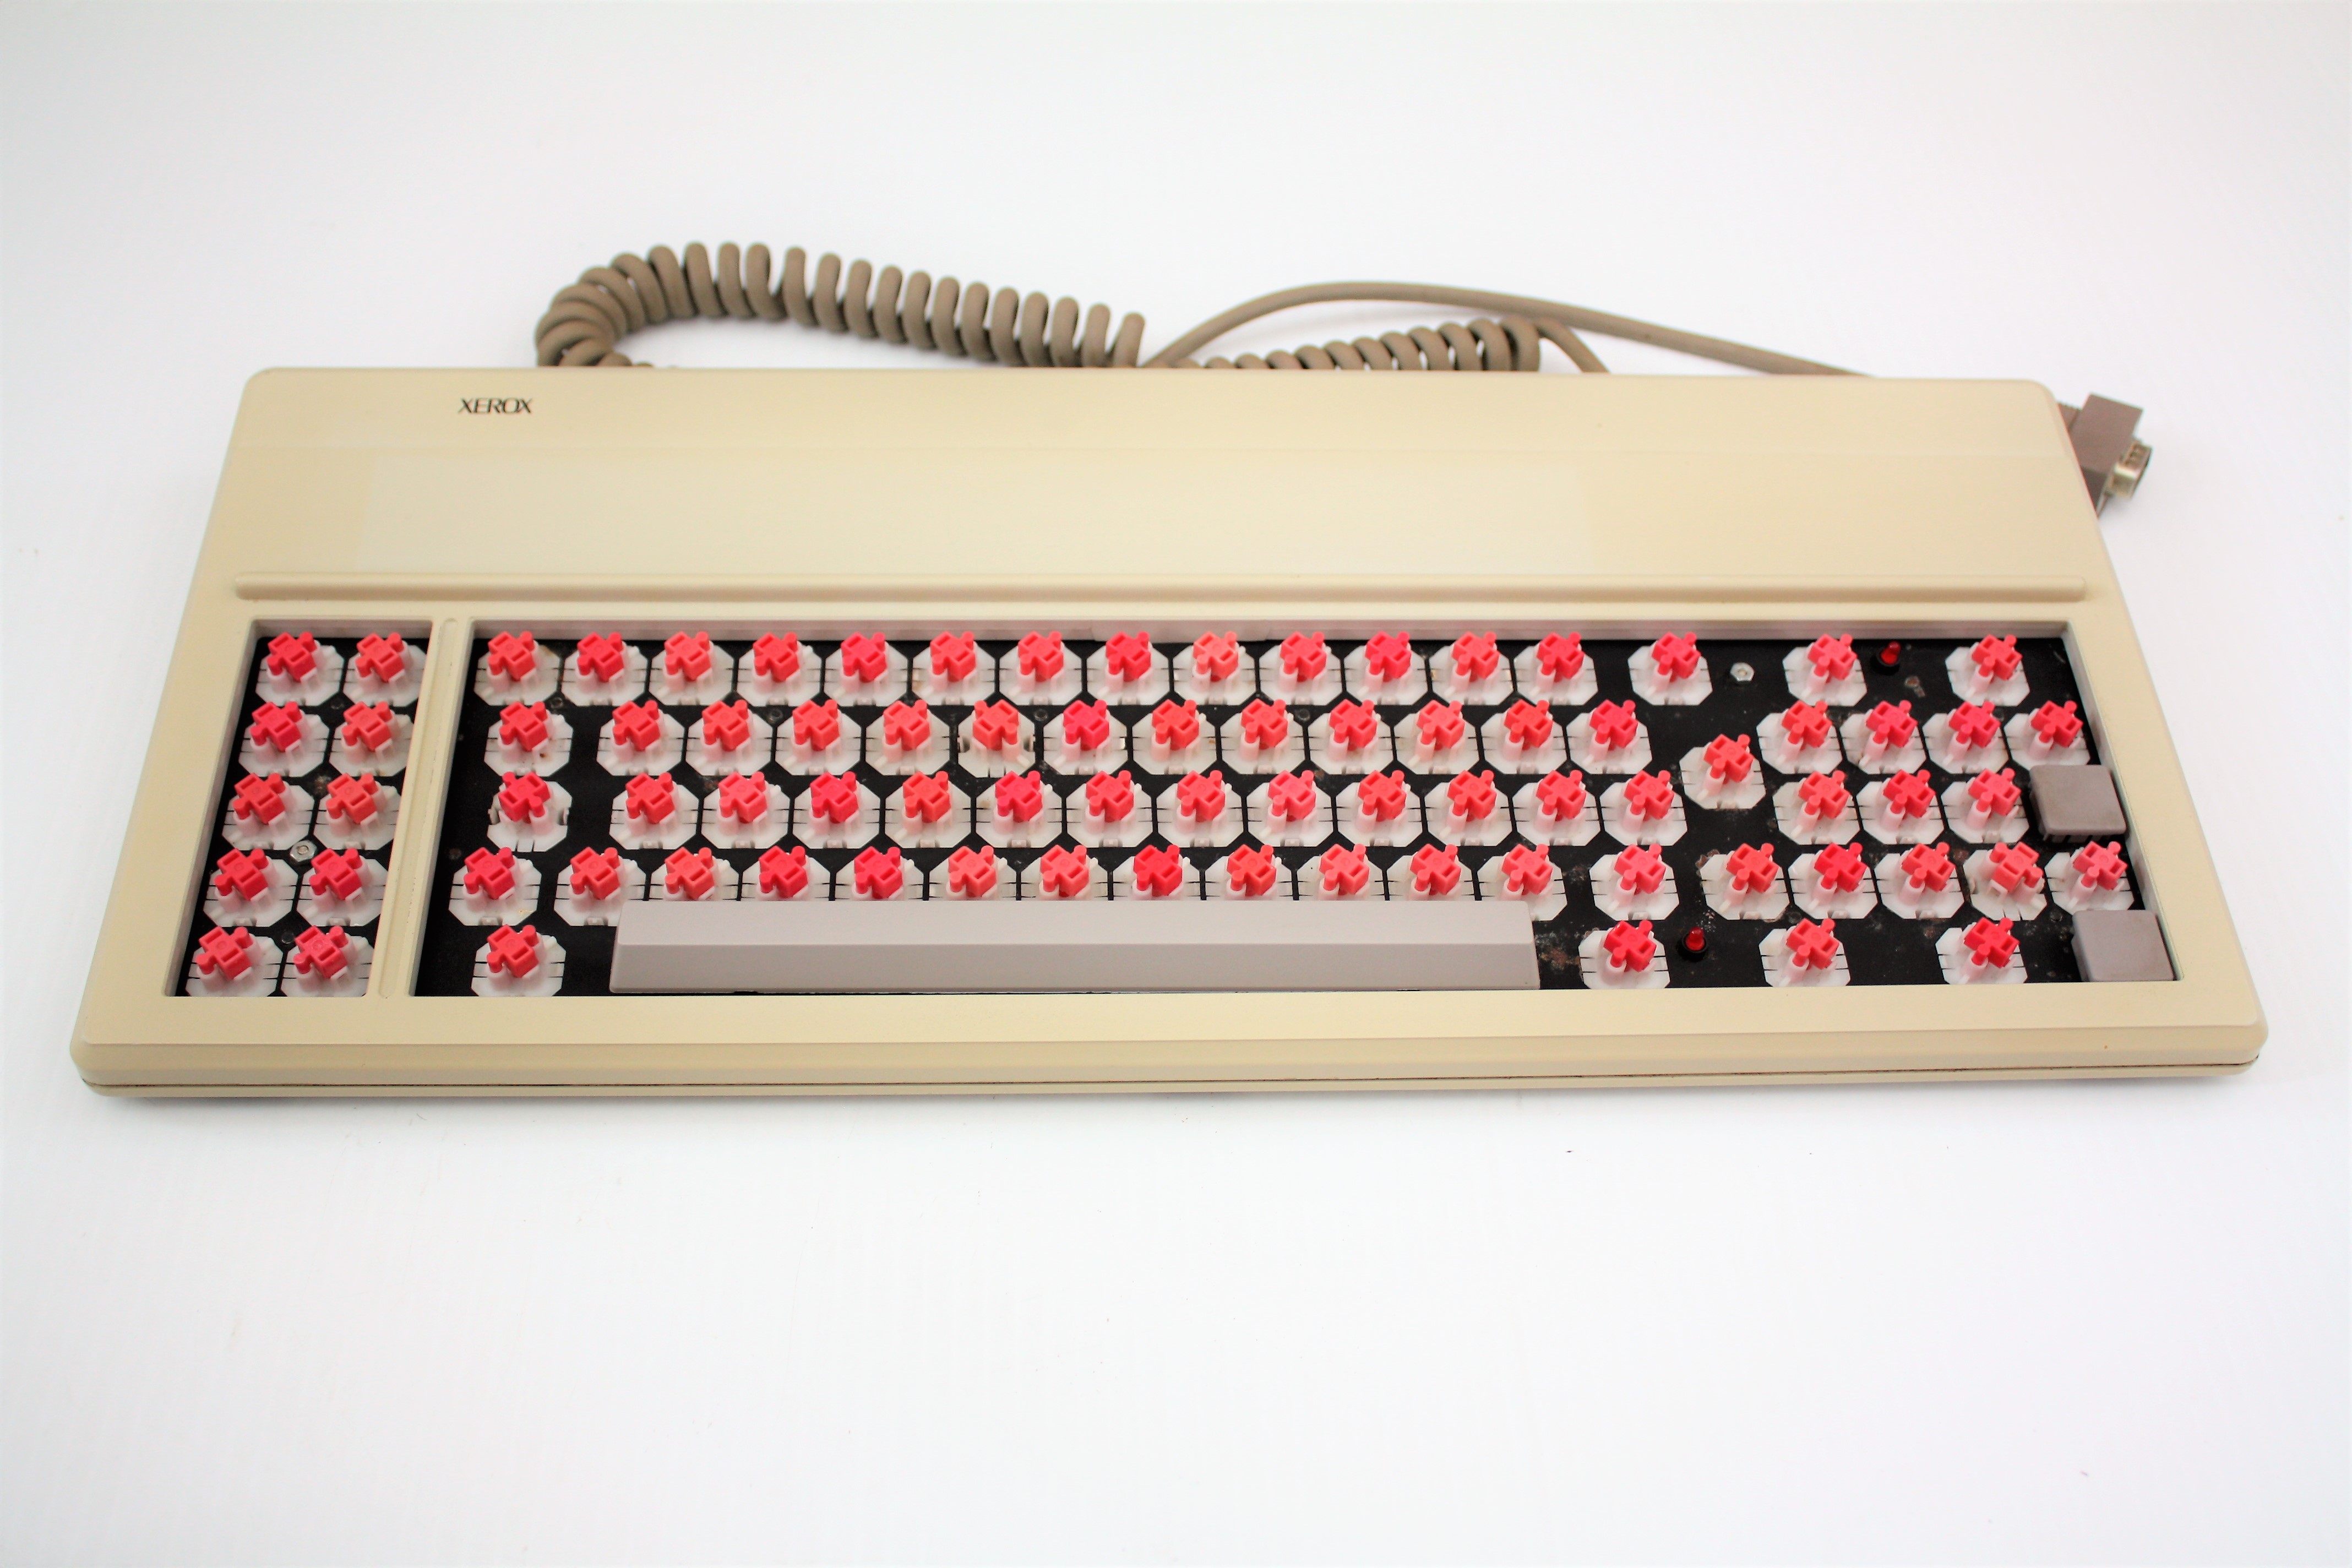 Xerox 6060 - key caps removed